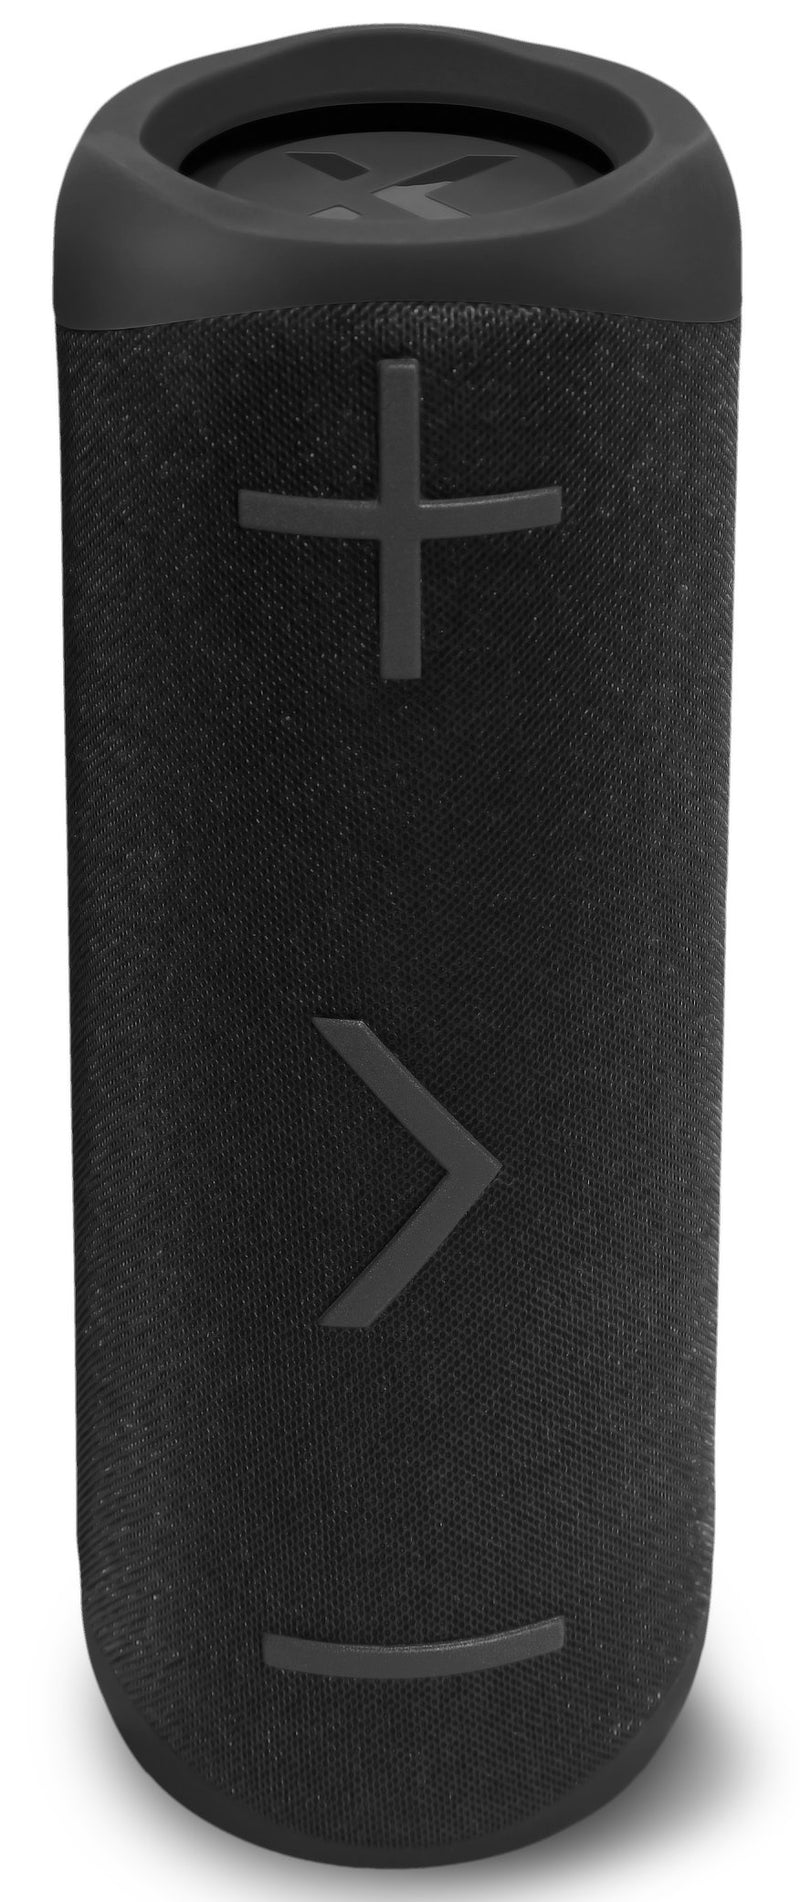 BlueAnt X2i Bluetooth Speaker